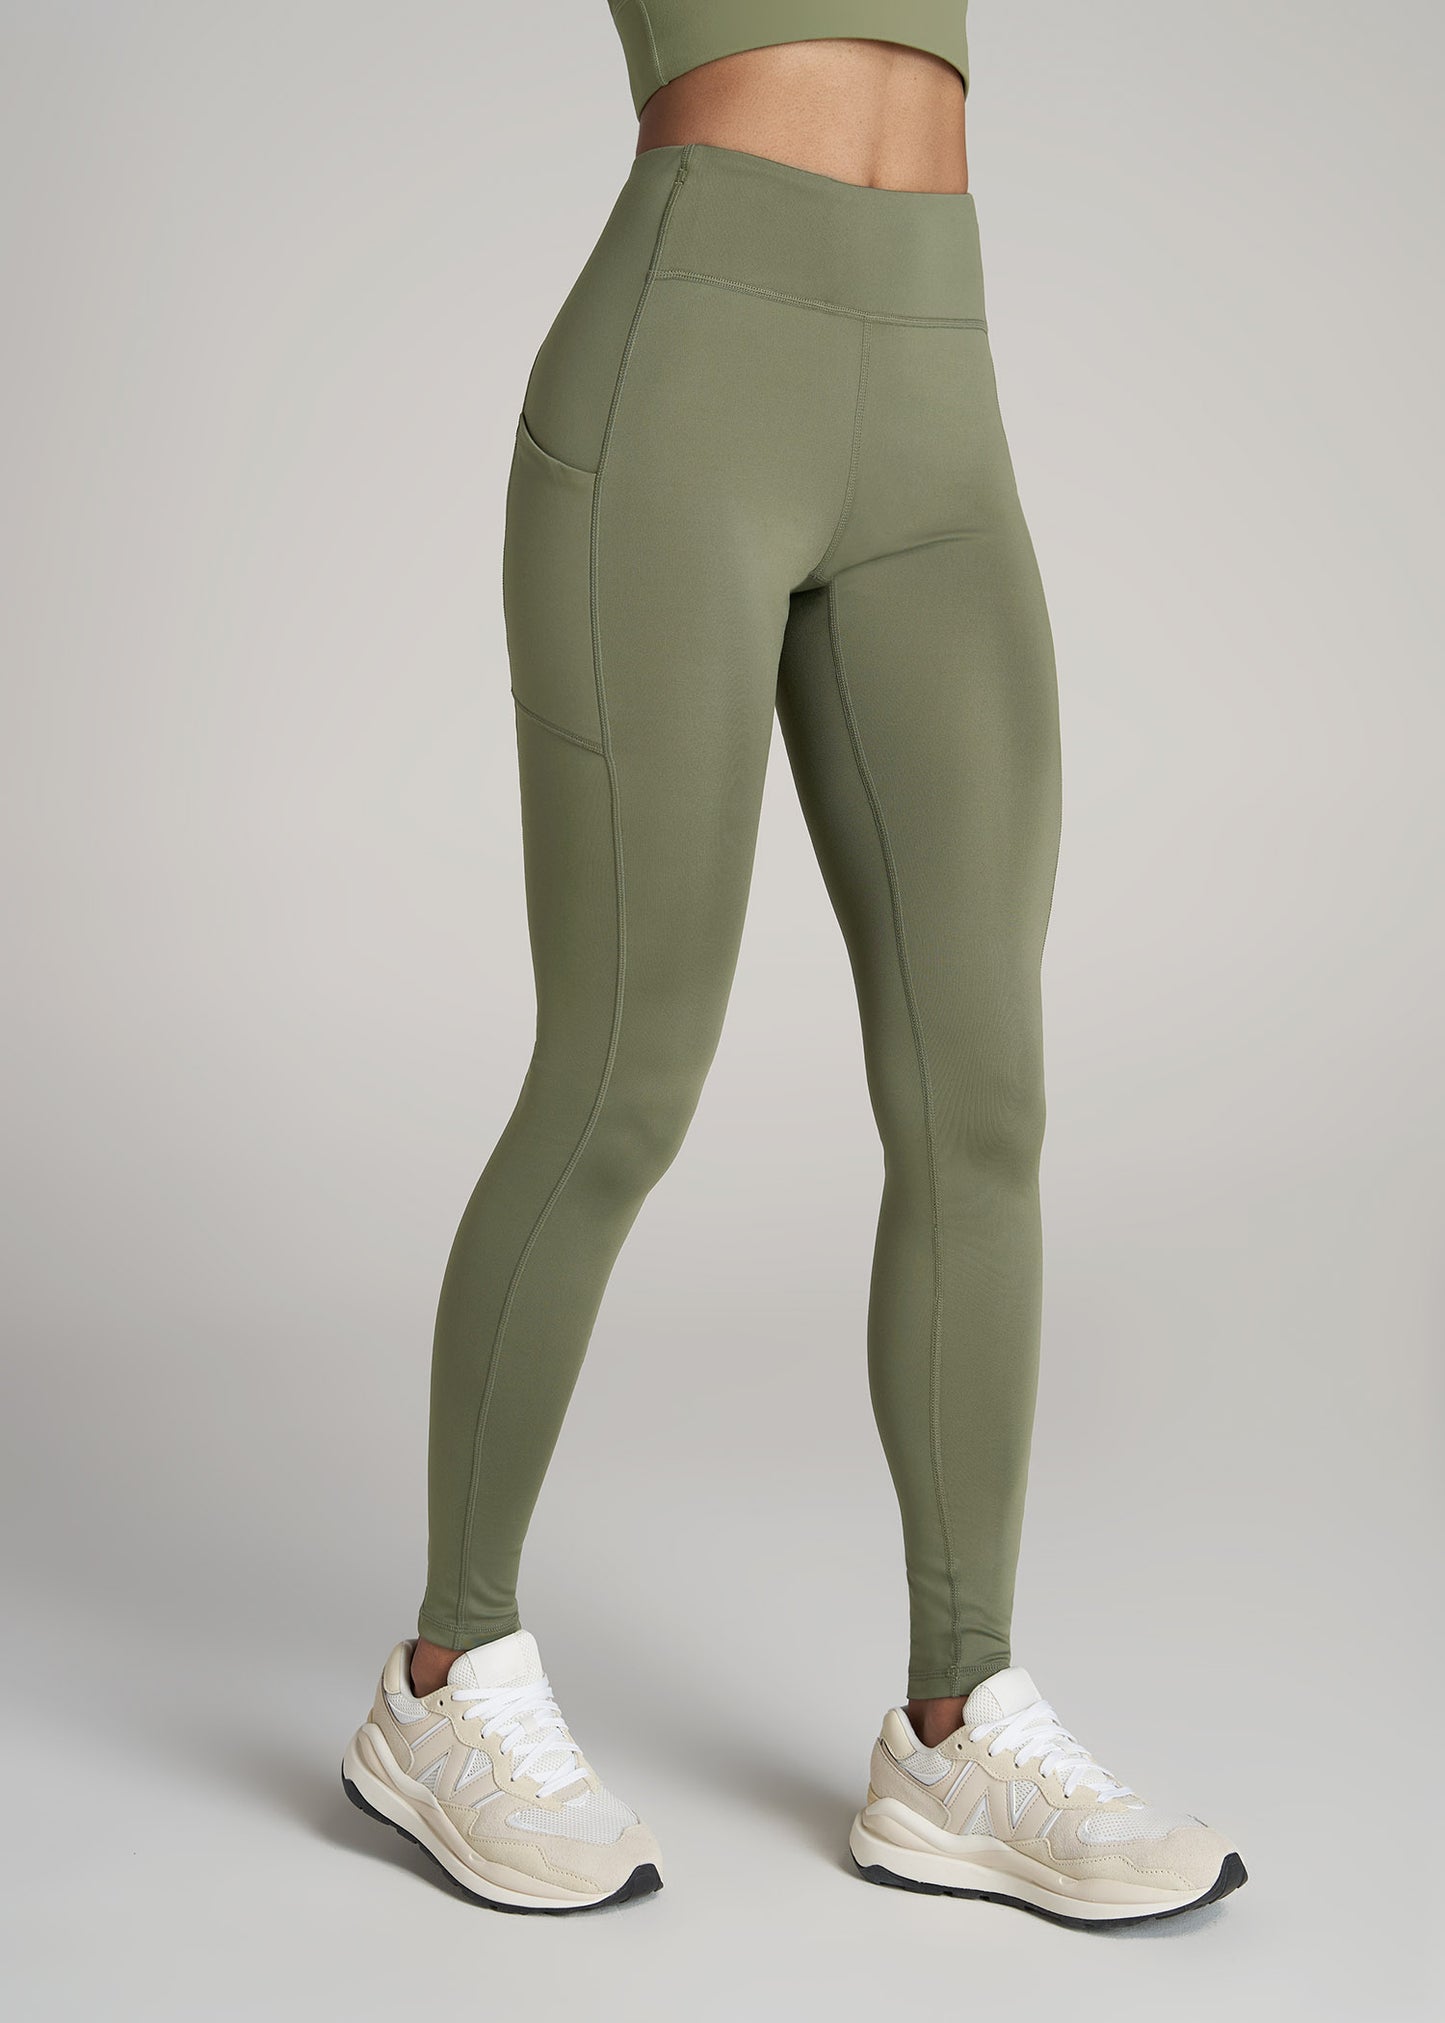 POP Fit Women's Fast Lane Pocket Stretch Leggings JM3 Olive Green Size XL  NWT